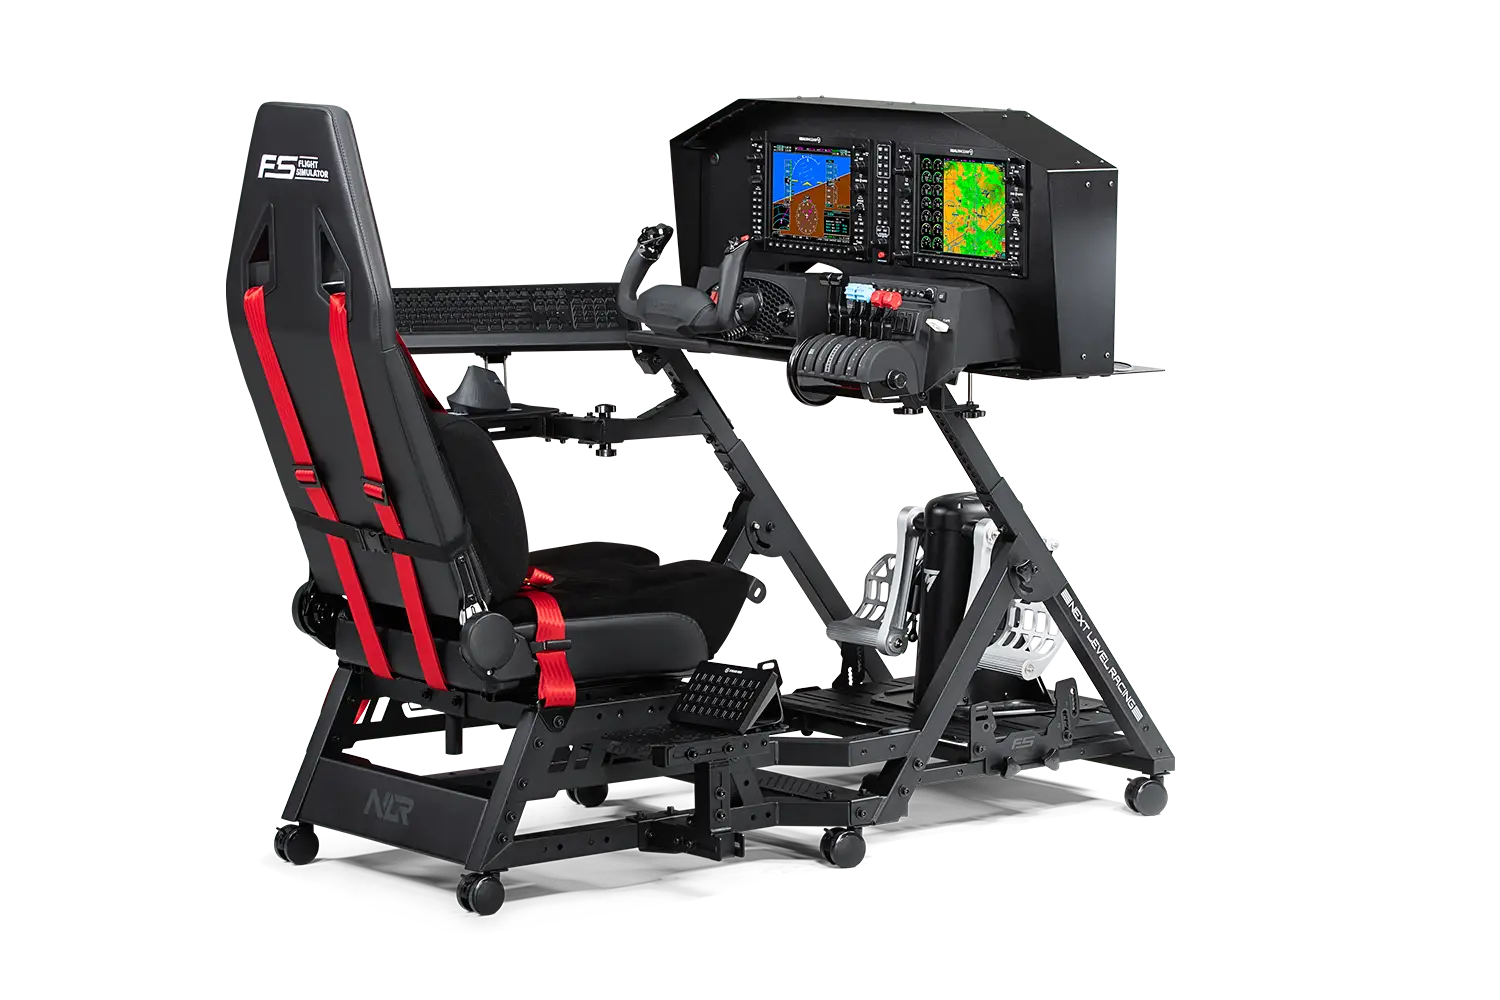 Flight Simulator Seat Only - Next Level Racing